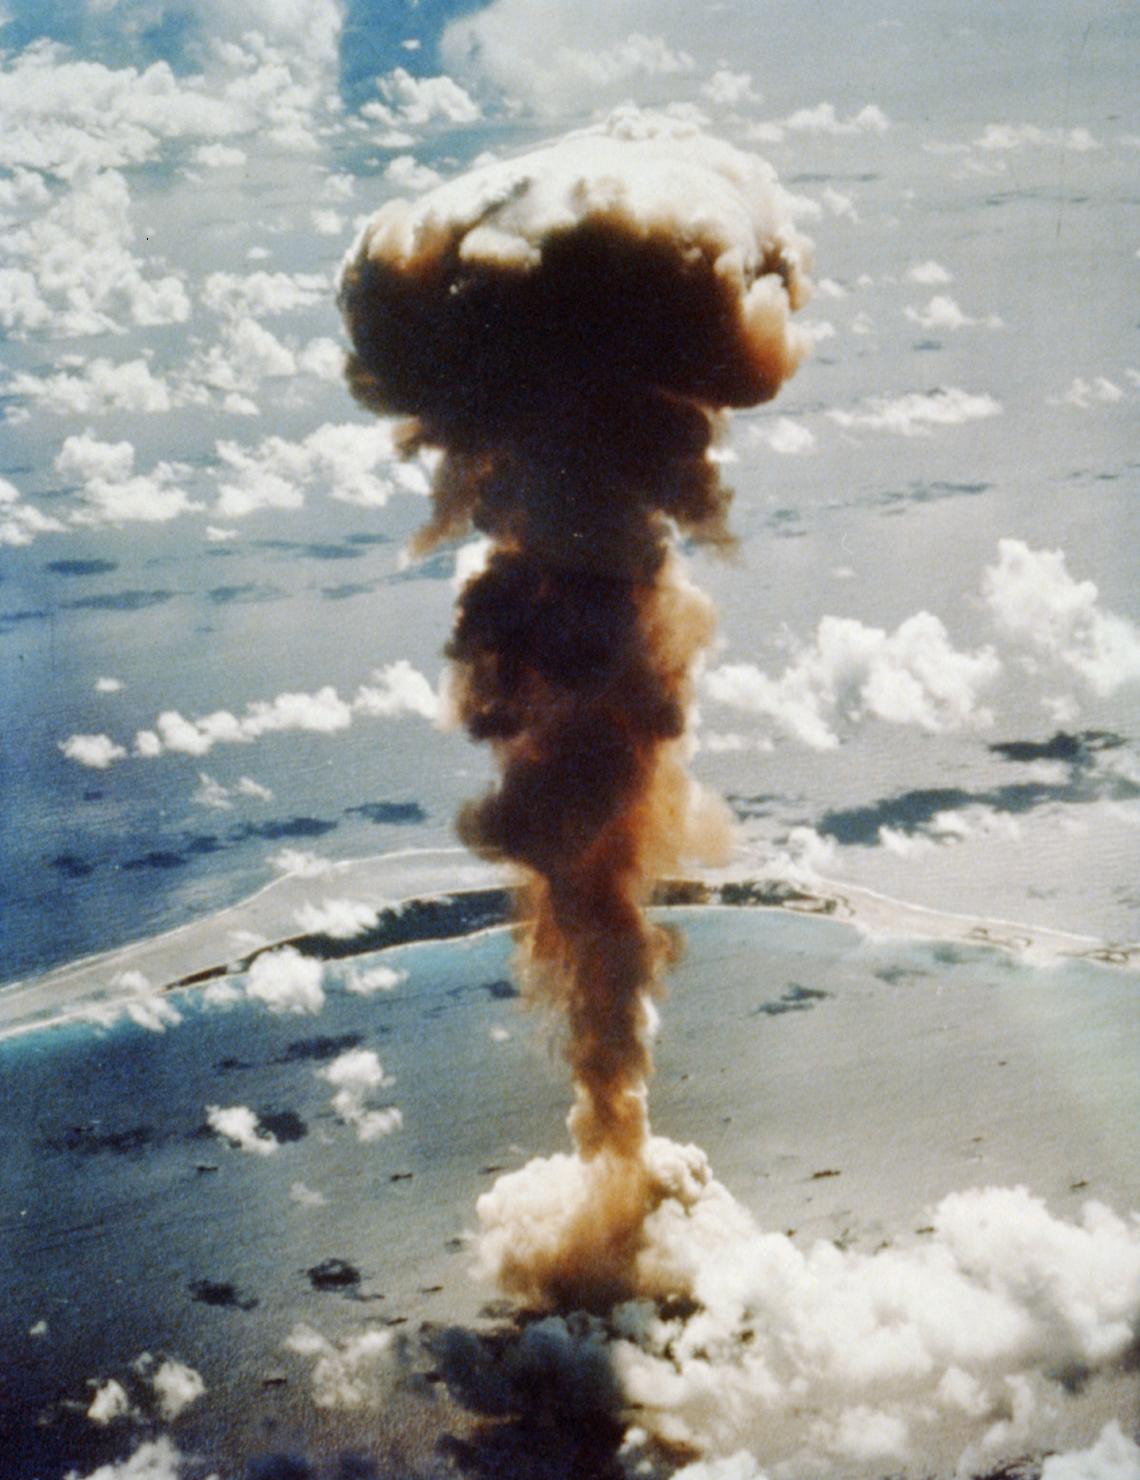 Pruebas nucleares en atolón Bikini Wikipedia, la enciclopedia libre